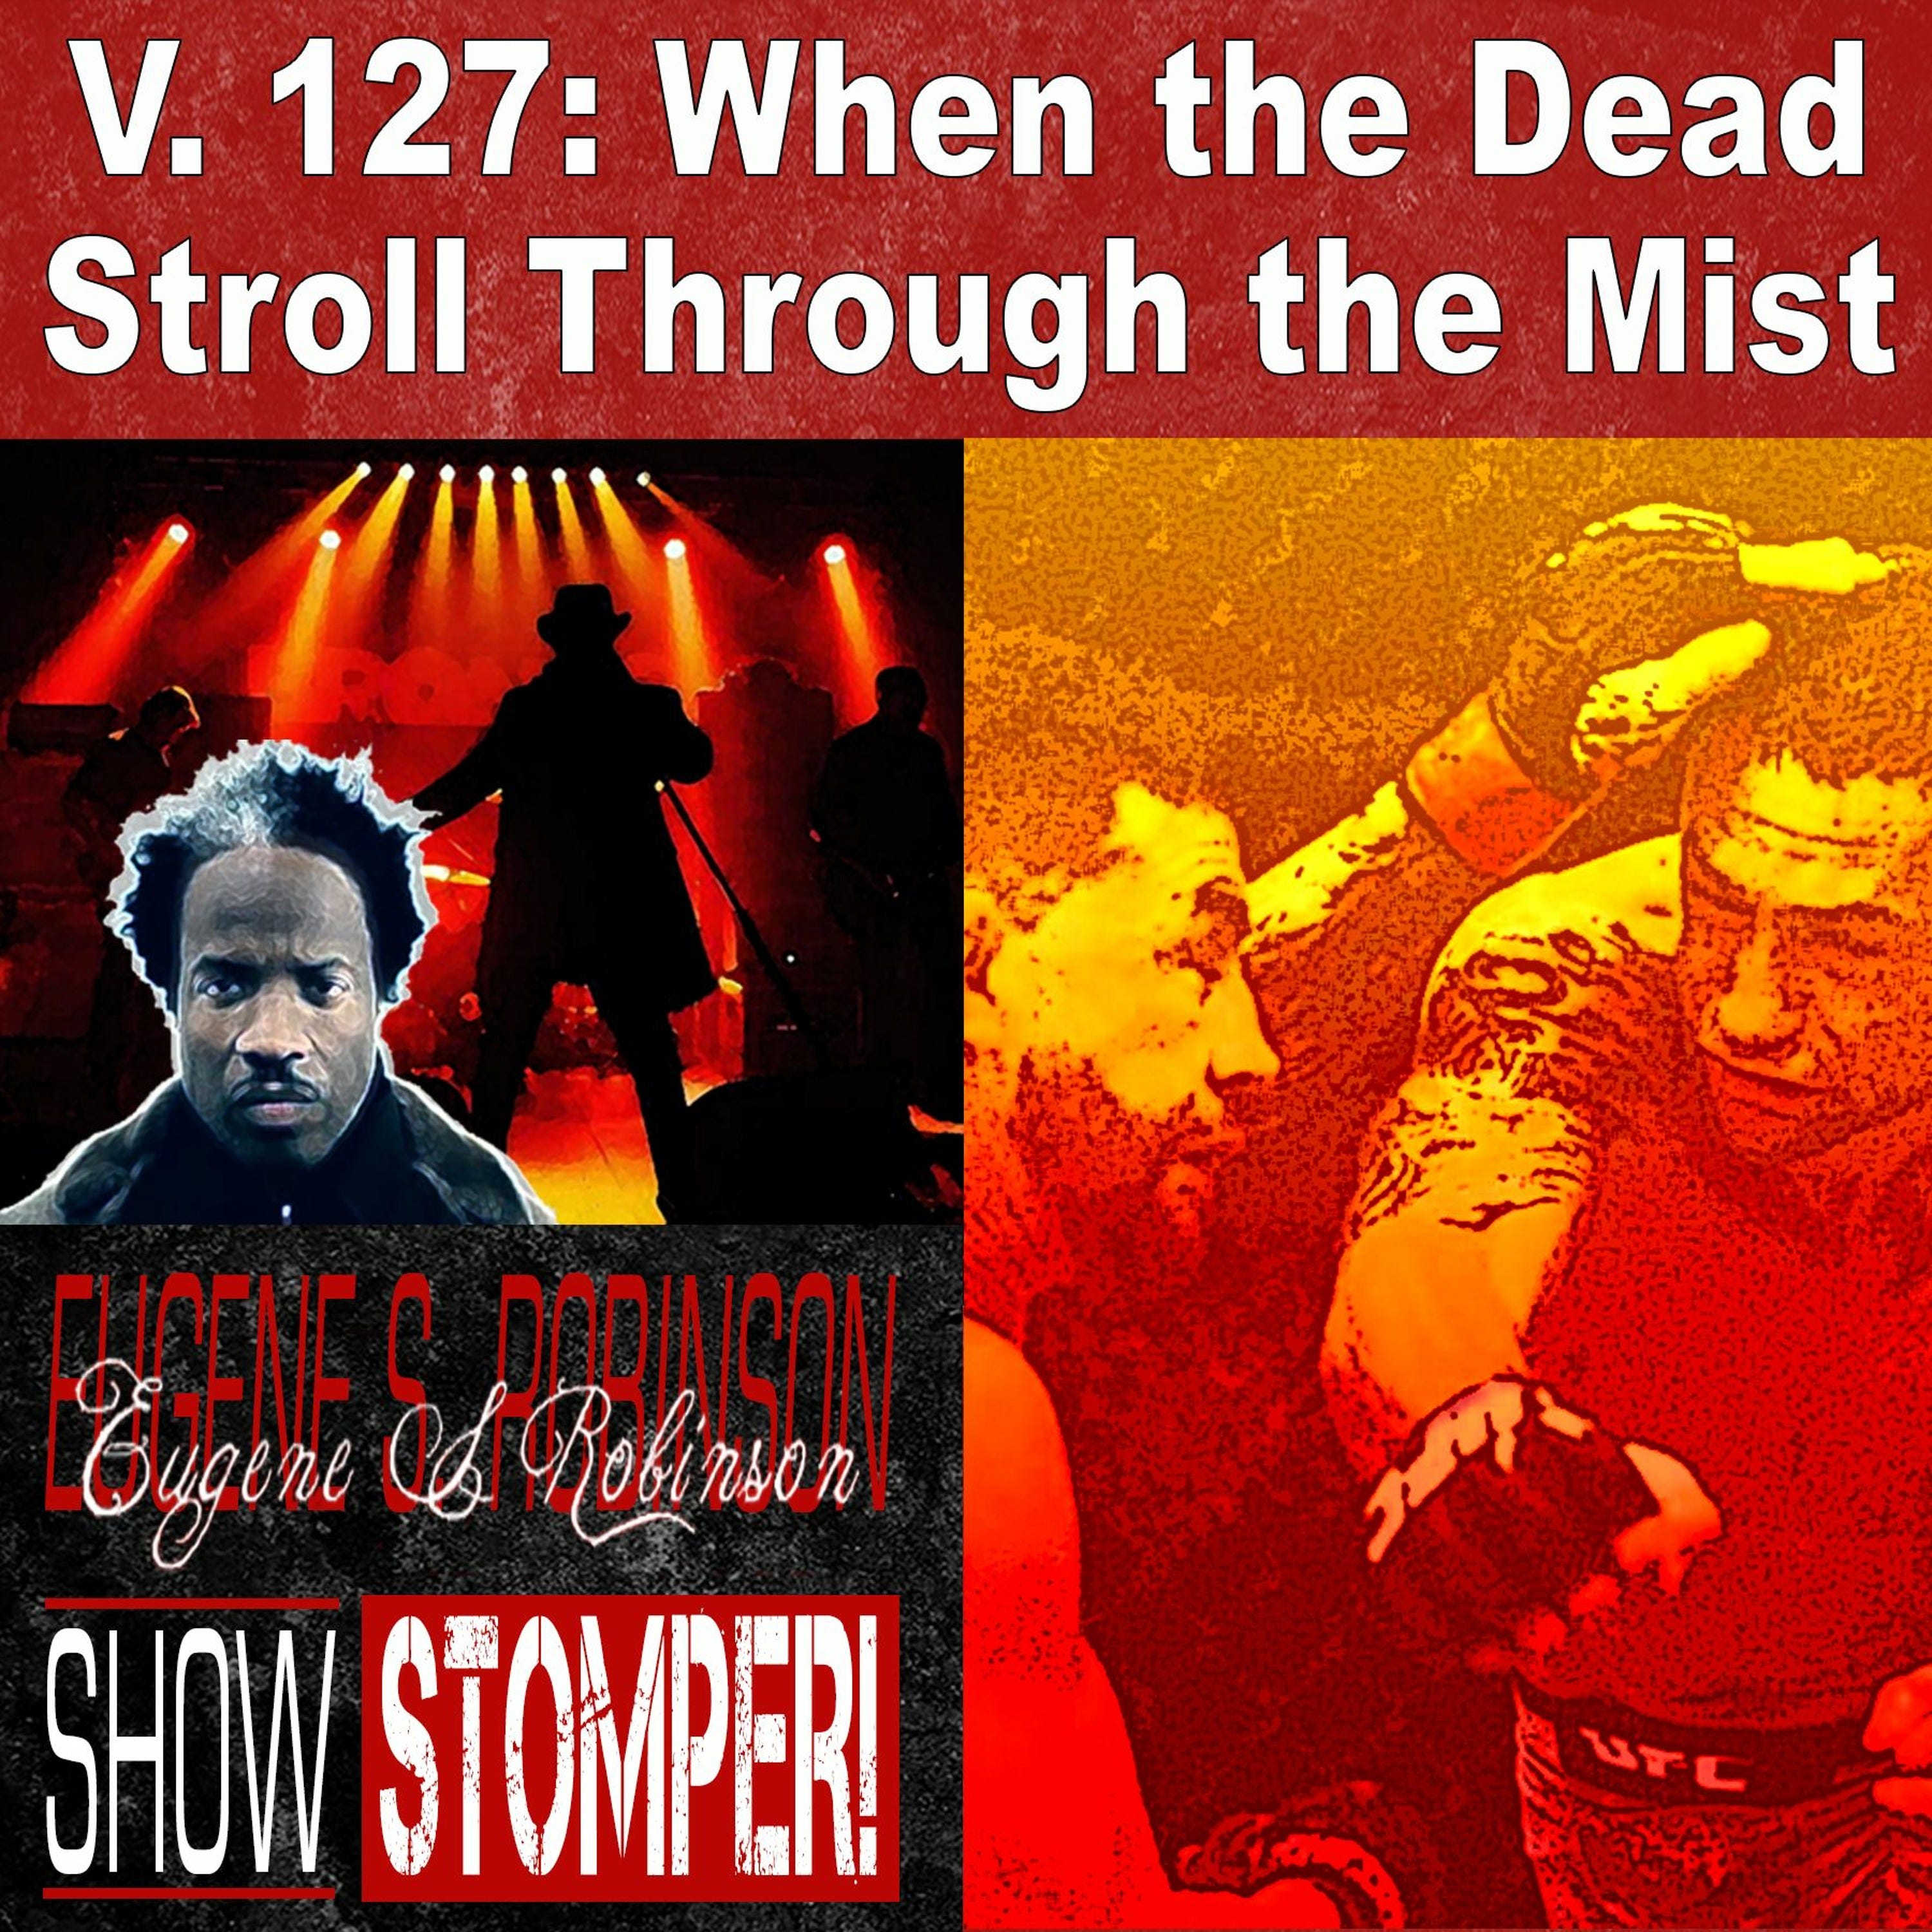 V. 127 When The Dead Stroll Through The Mist On The Eugene S. Robinson Show Stomper!